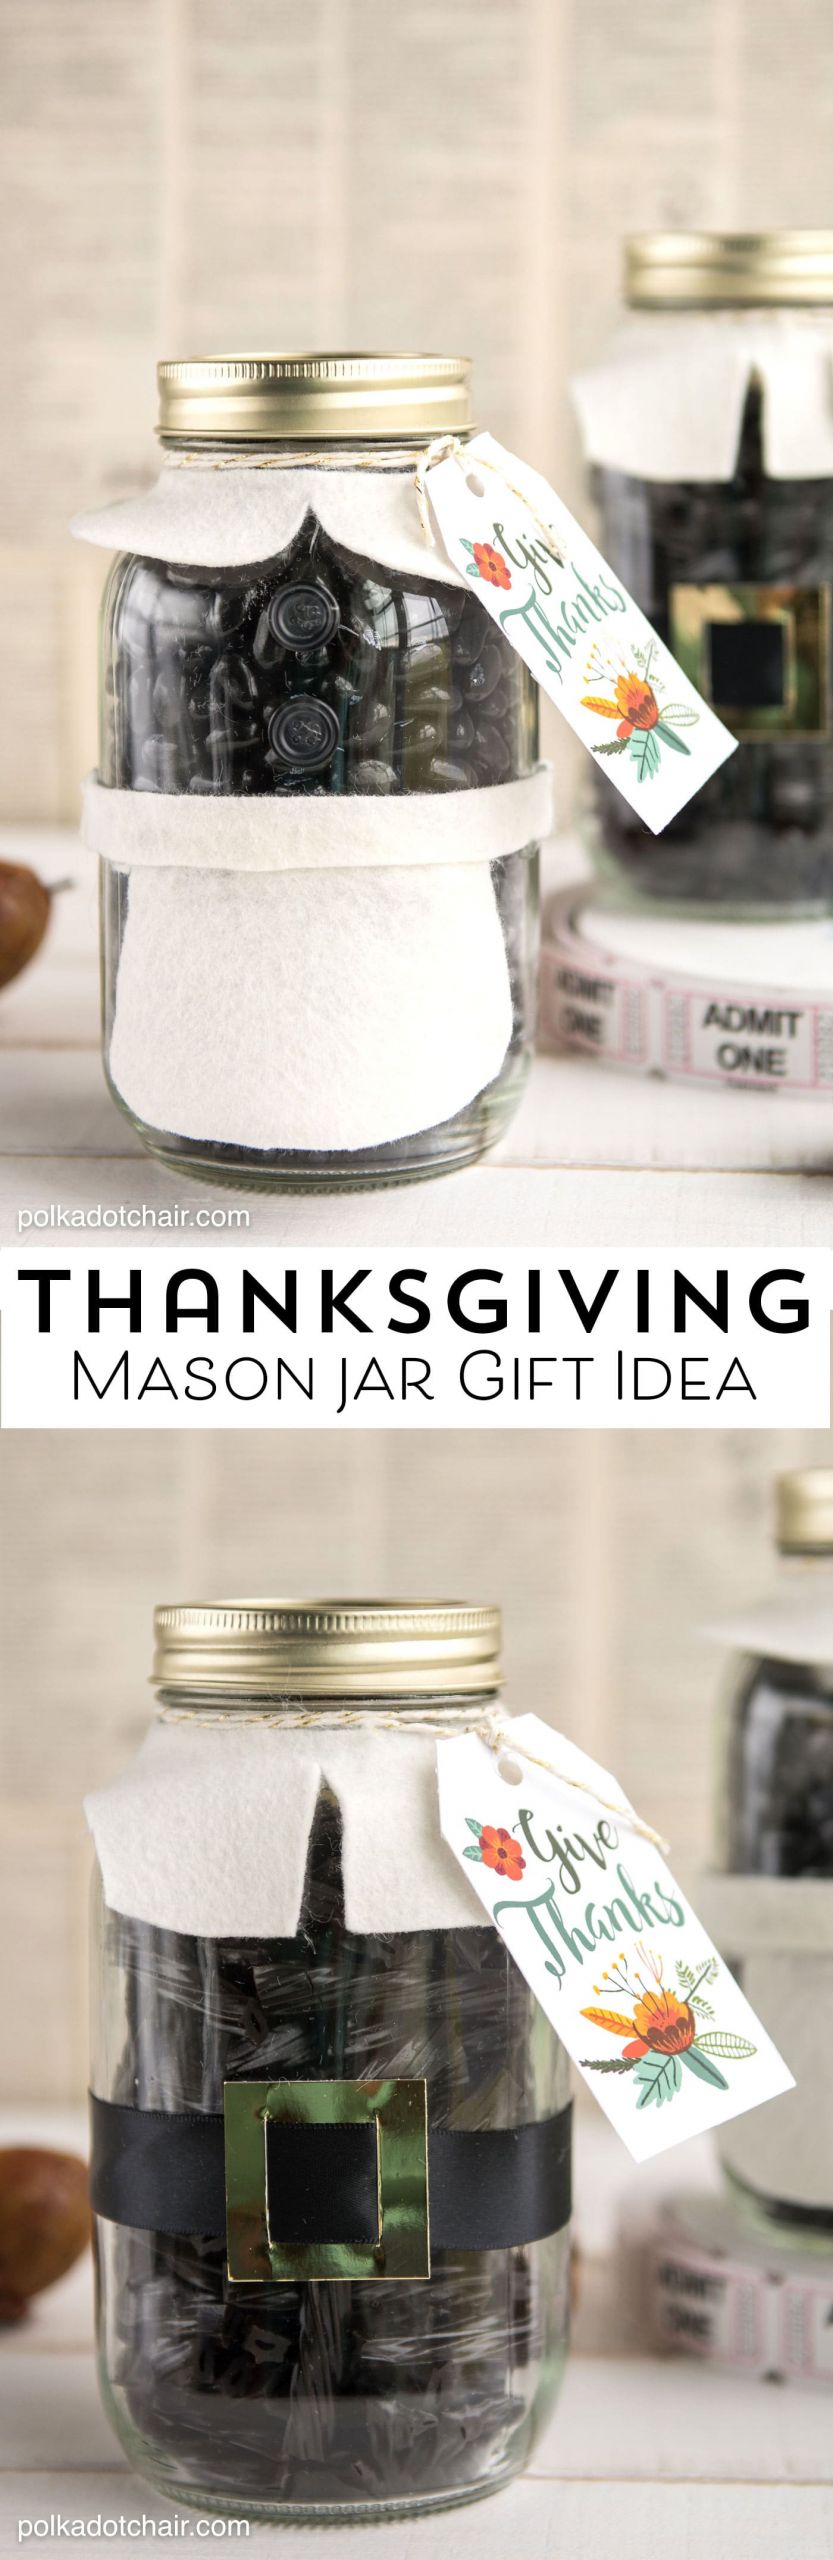 Pinterest Thanksgiving Gift Ideas
 Thanksgiving Mason Jar Gift Idea The Polka Dot Chair